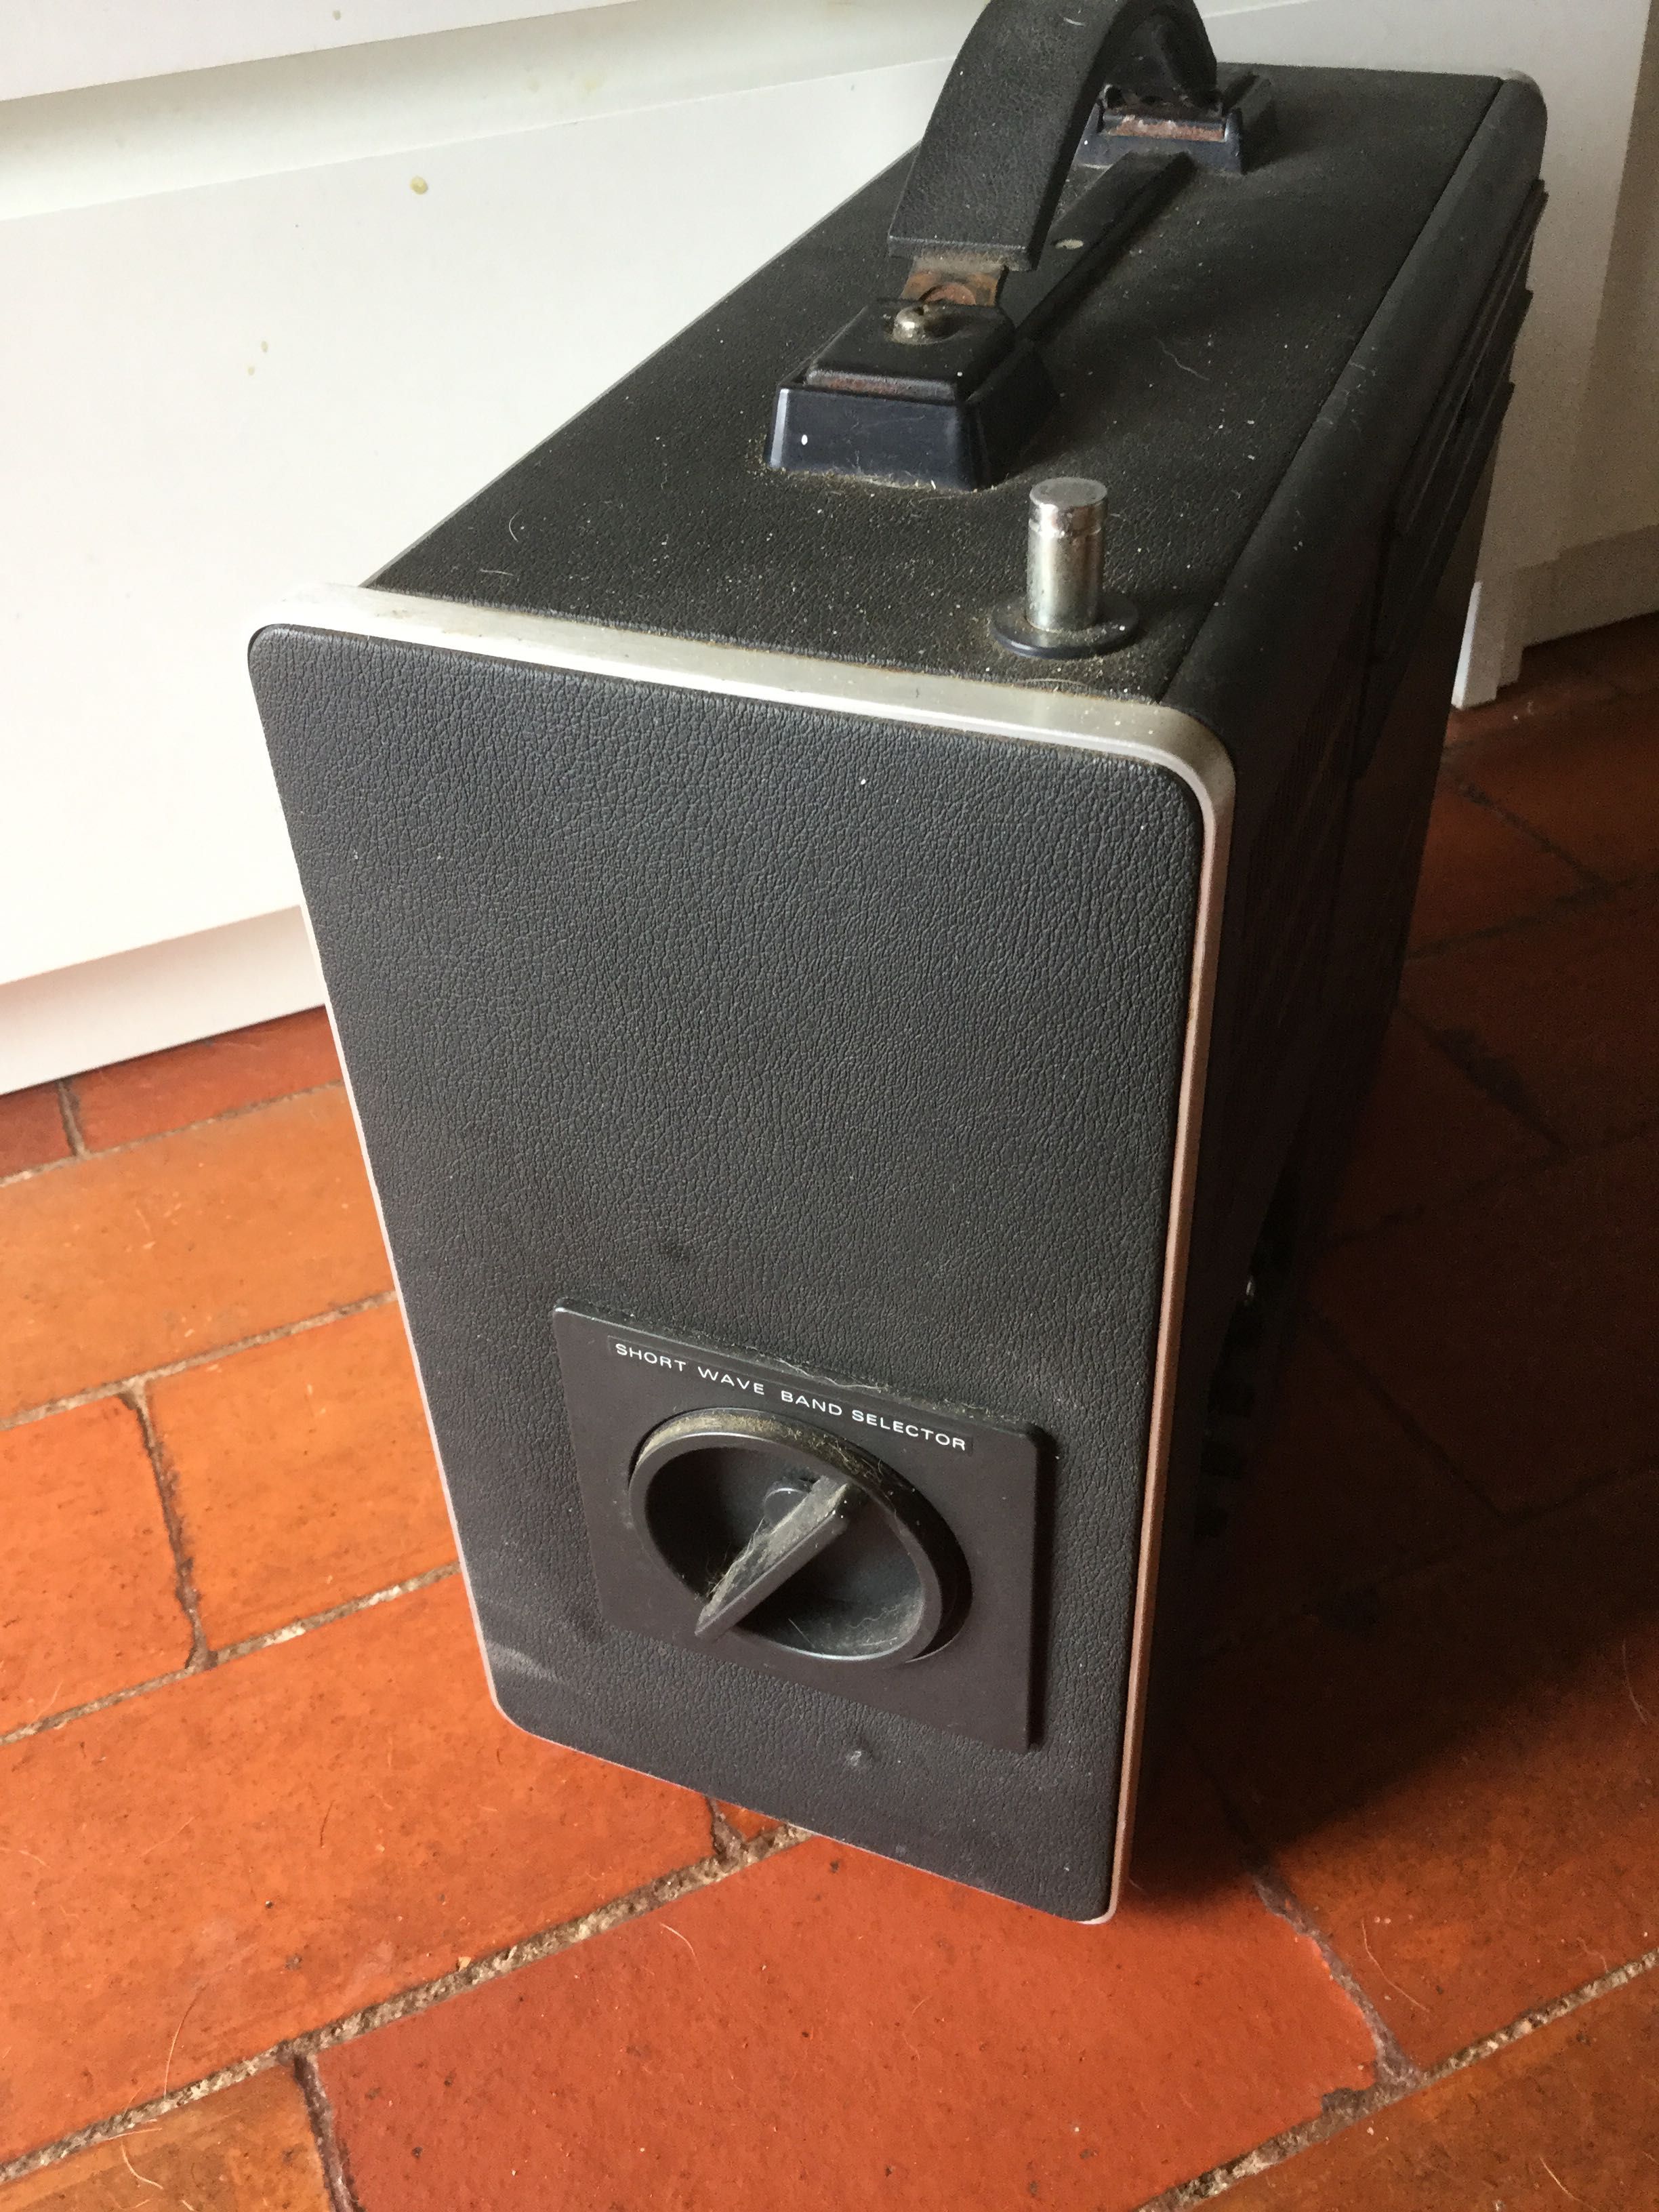 Rádio Sony CRF-150 FM-AM Solid State 13 Band (70s)